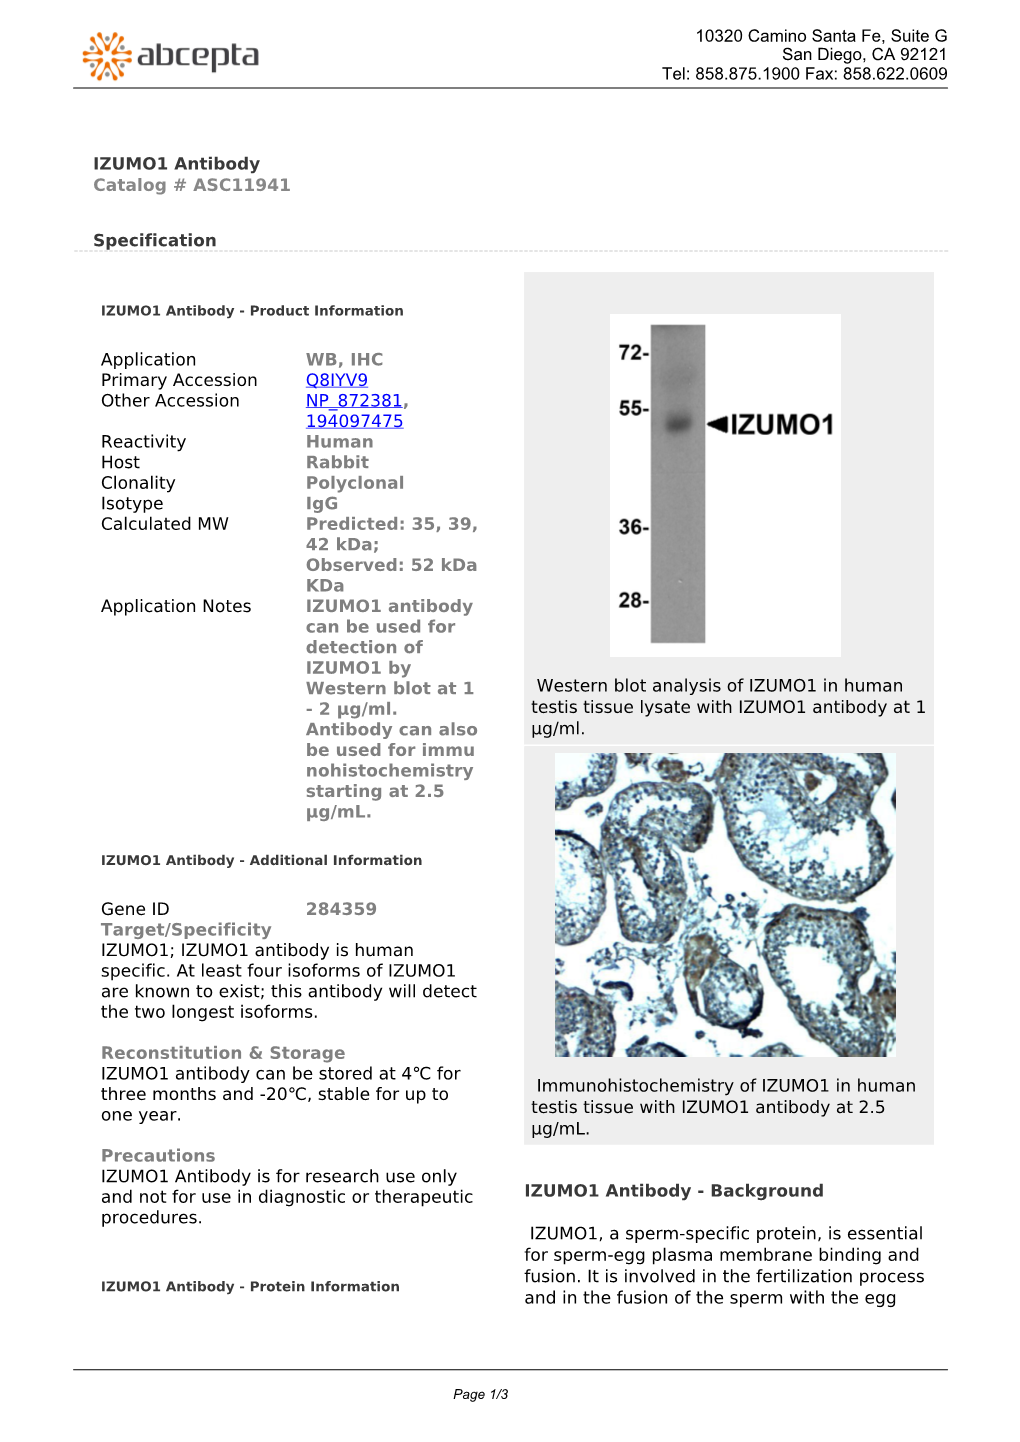 IZUMO1 Antibody Catalog # ASC11941